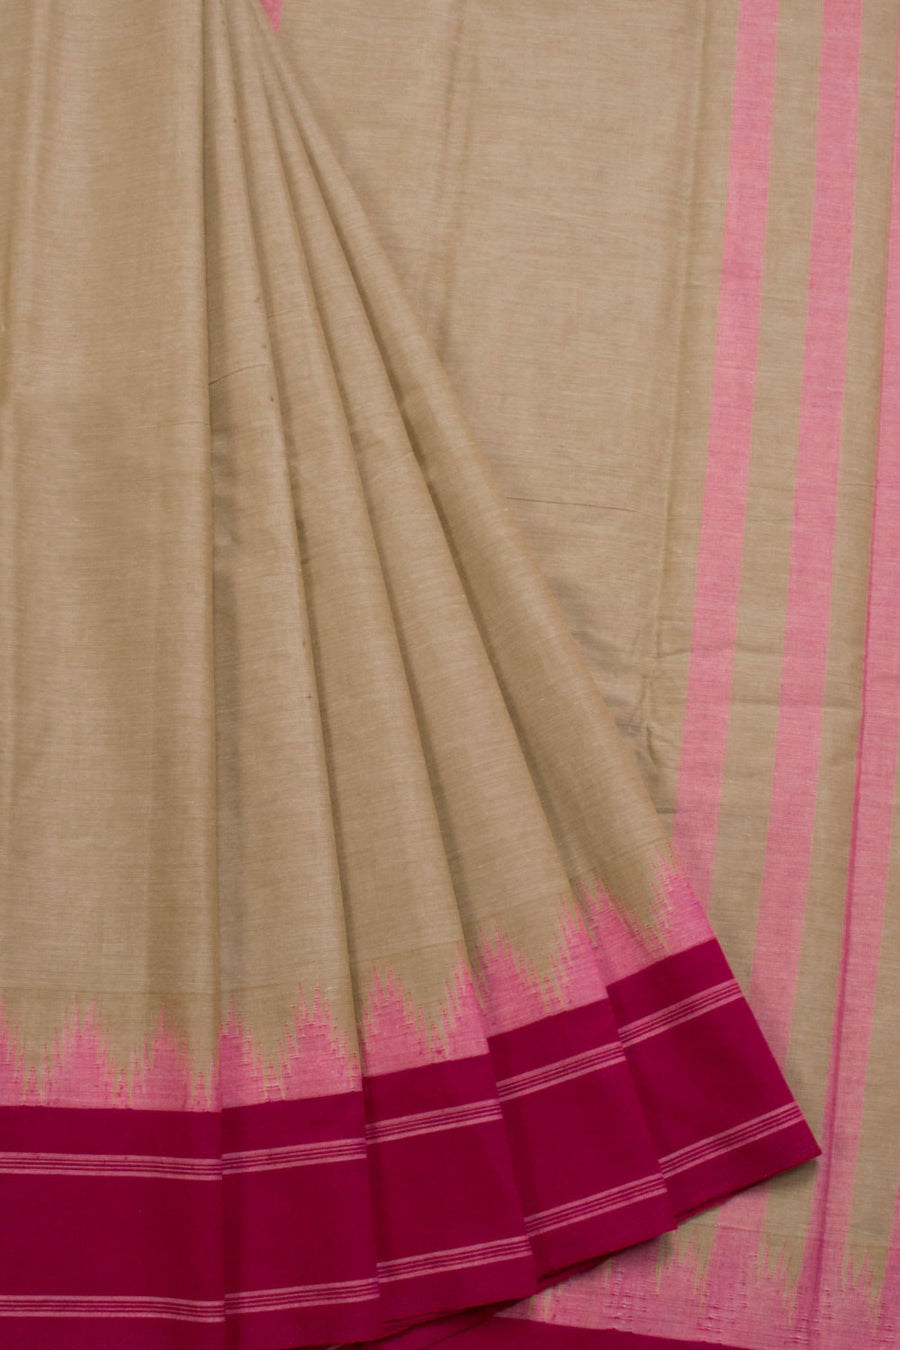 Dual Shot Handloom Kanchi Cotton Saree - Avishya